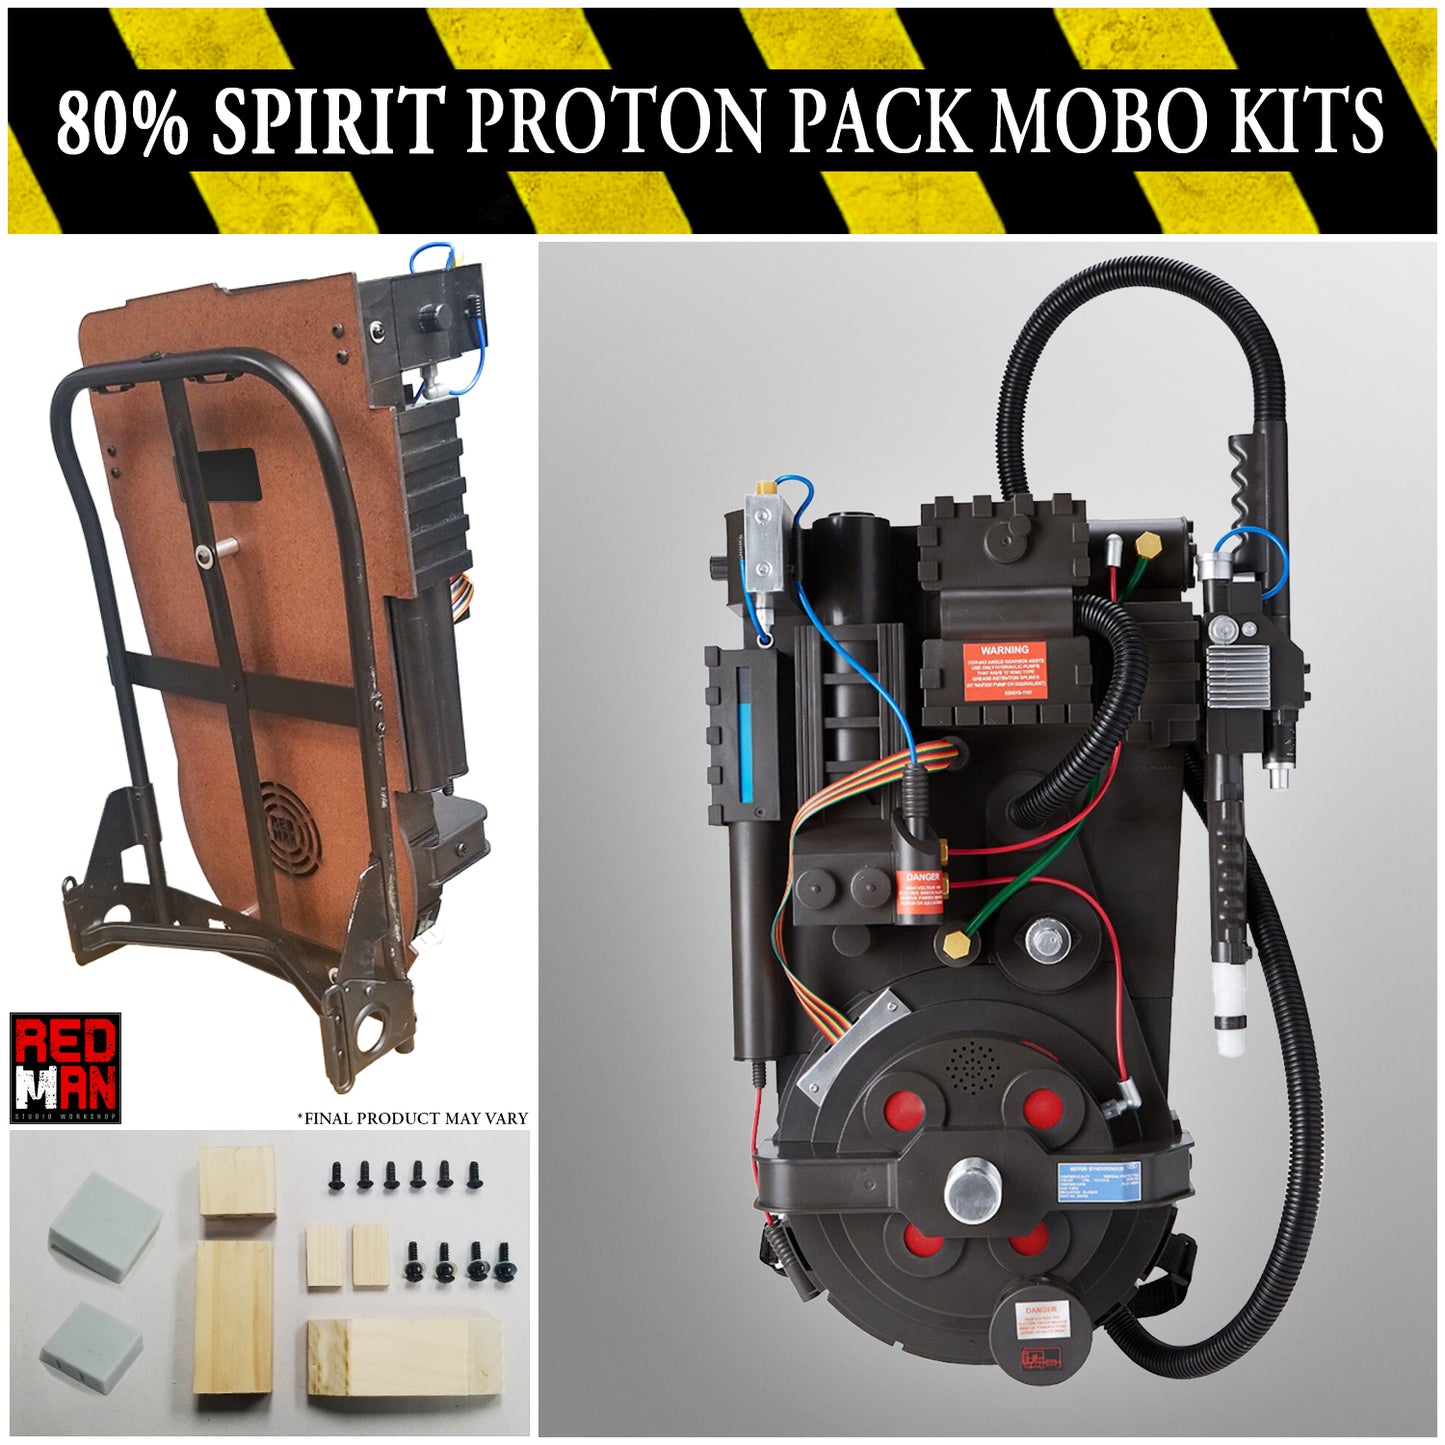 GB Proton Pack MoBo (SPIRIT 80%)